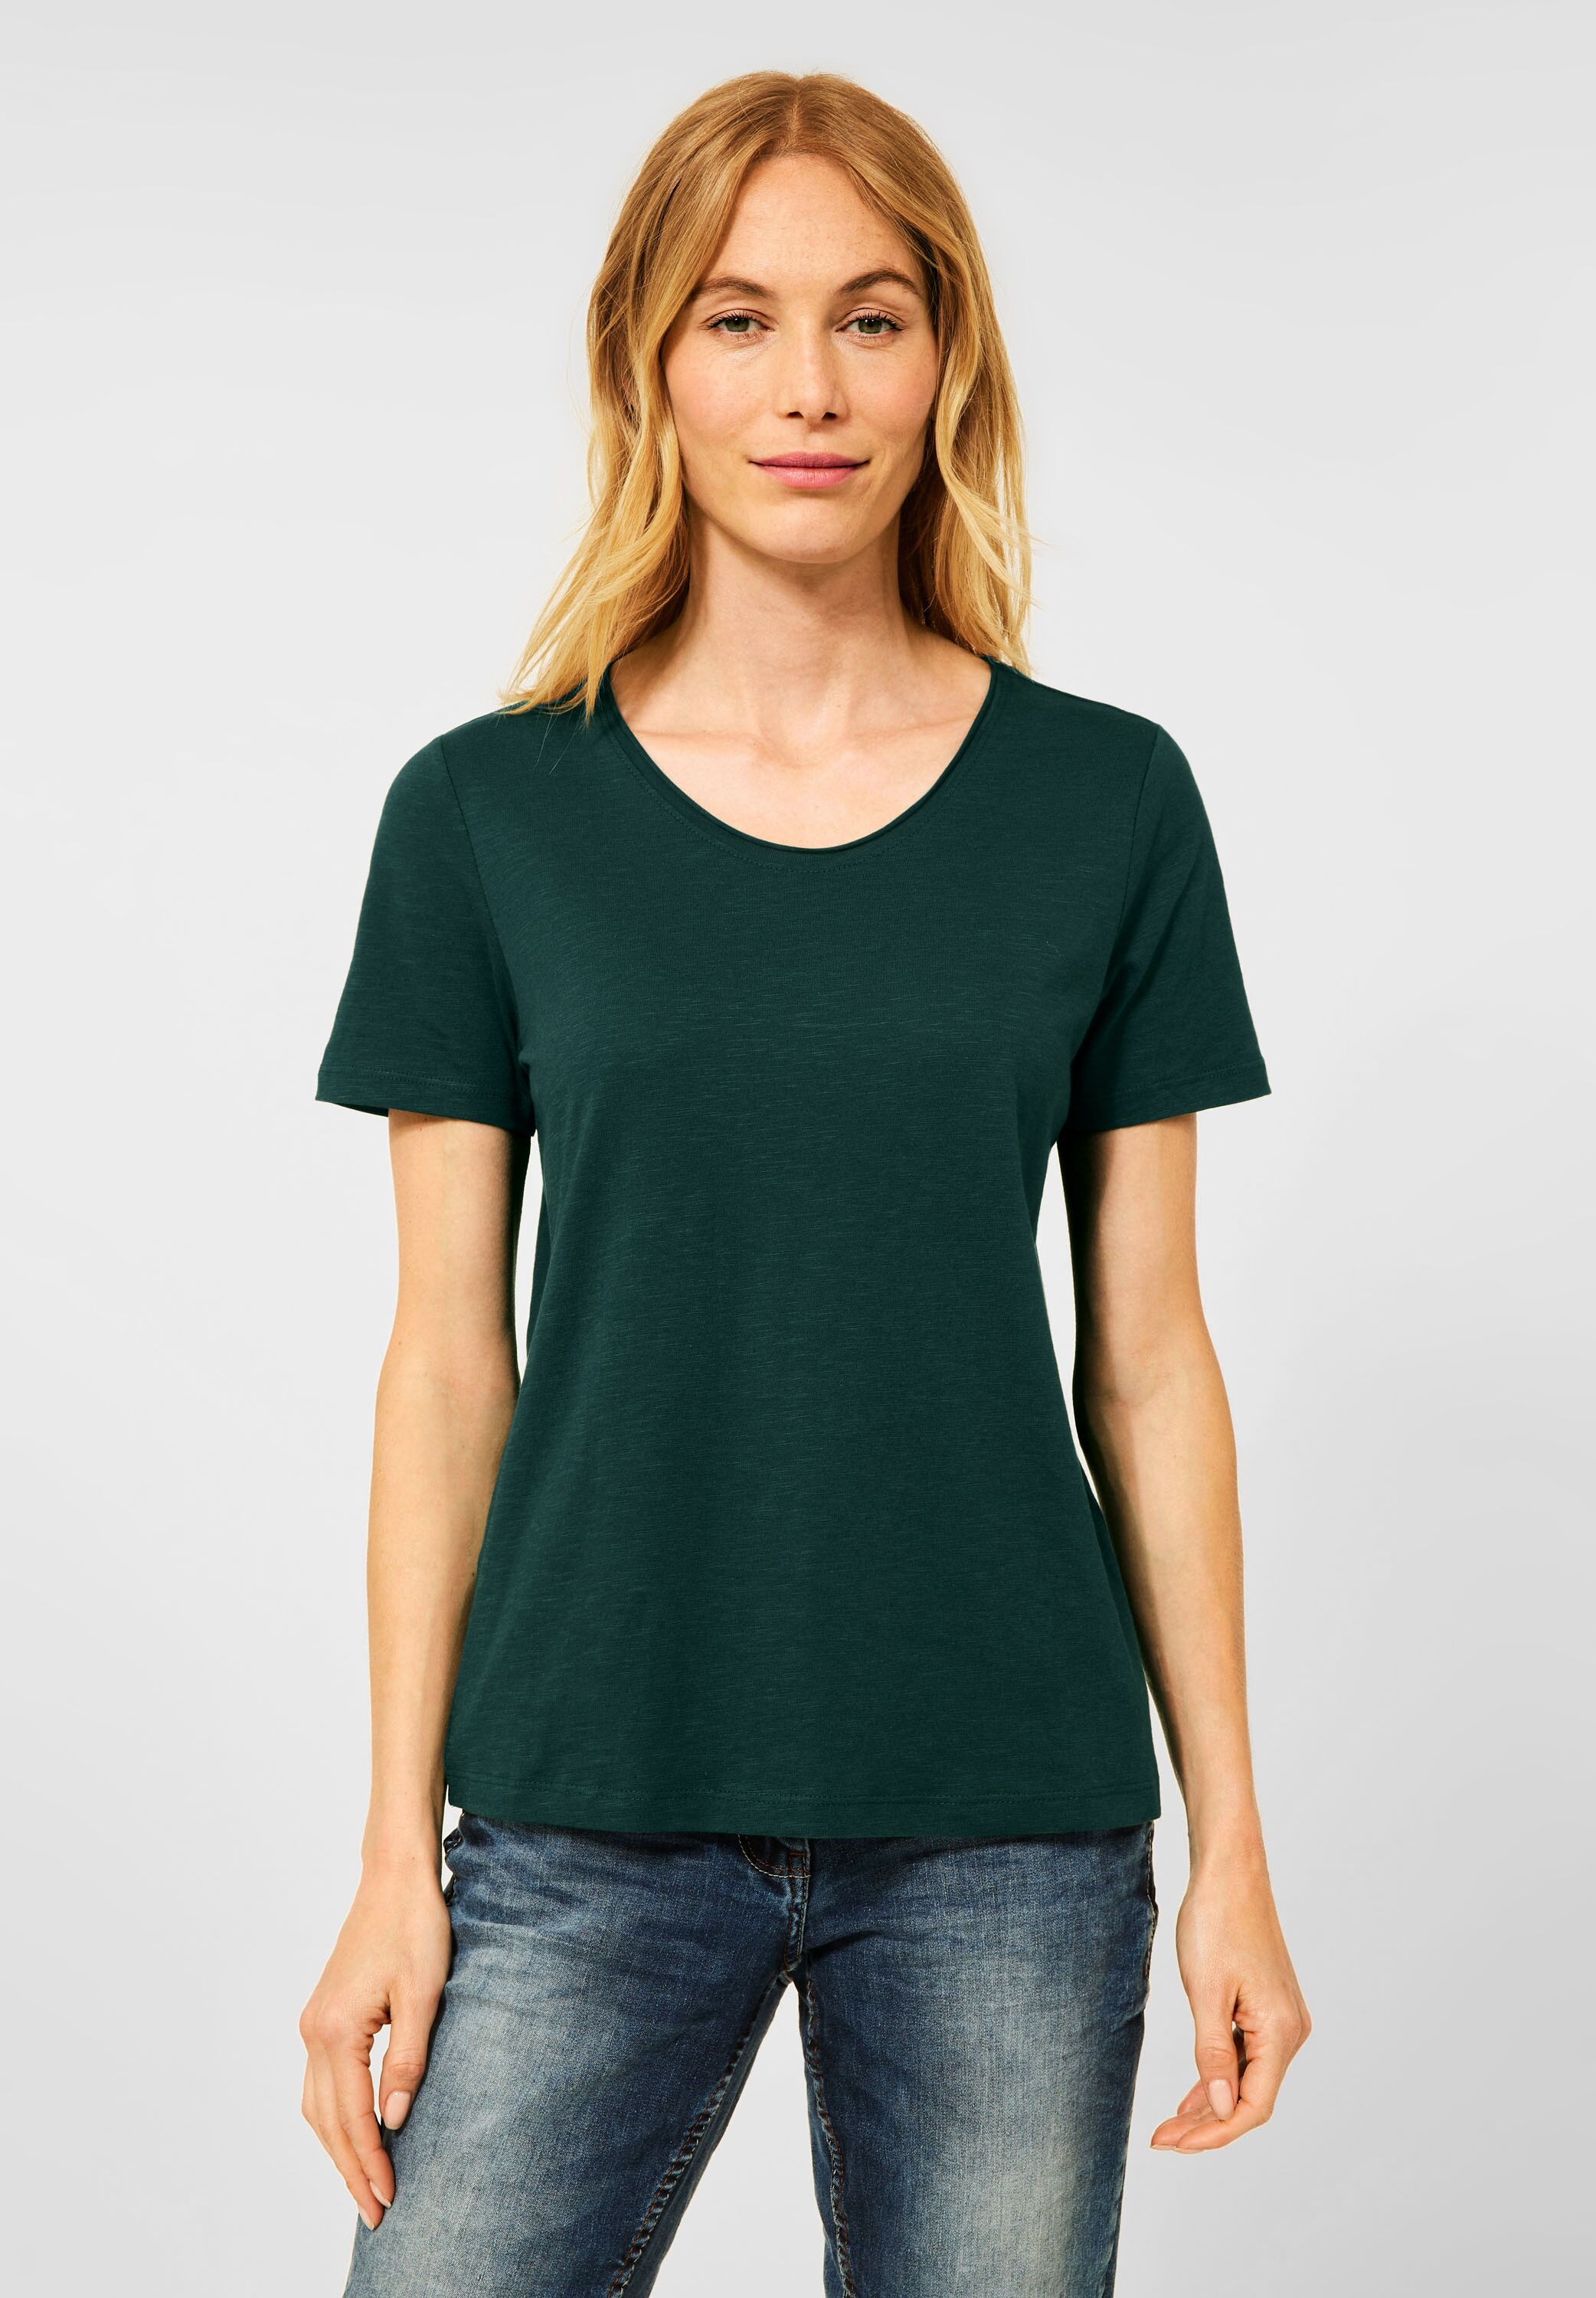 CECIL T-Shirt in Ponderosa Pine Green im SALE reduziert B317596-13973 -  CONCEPT Mode